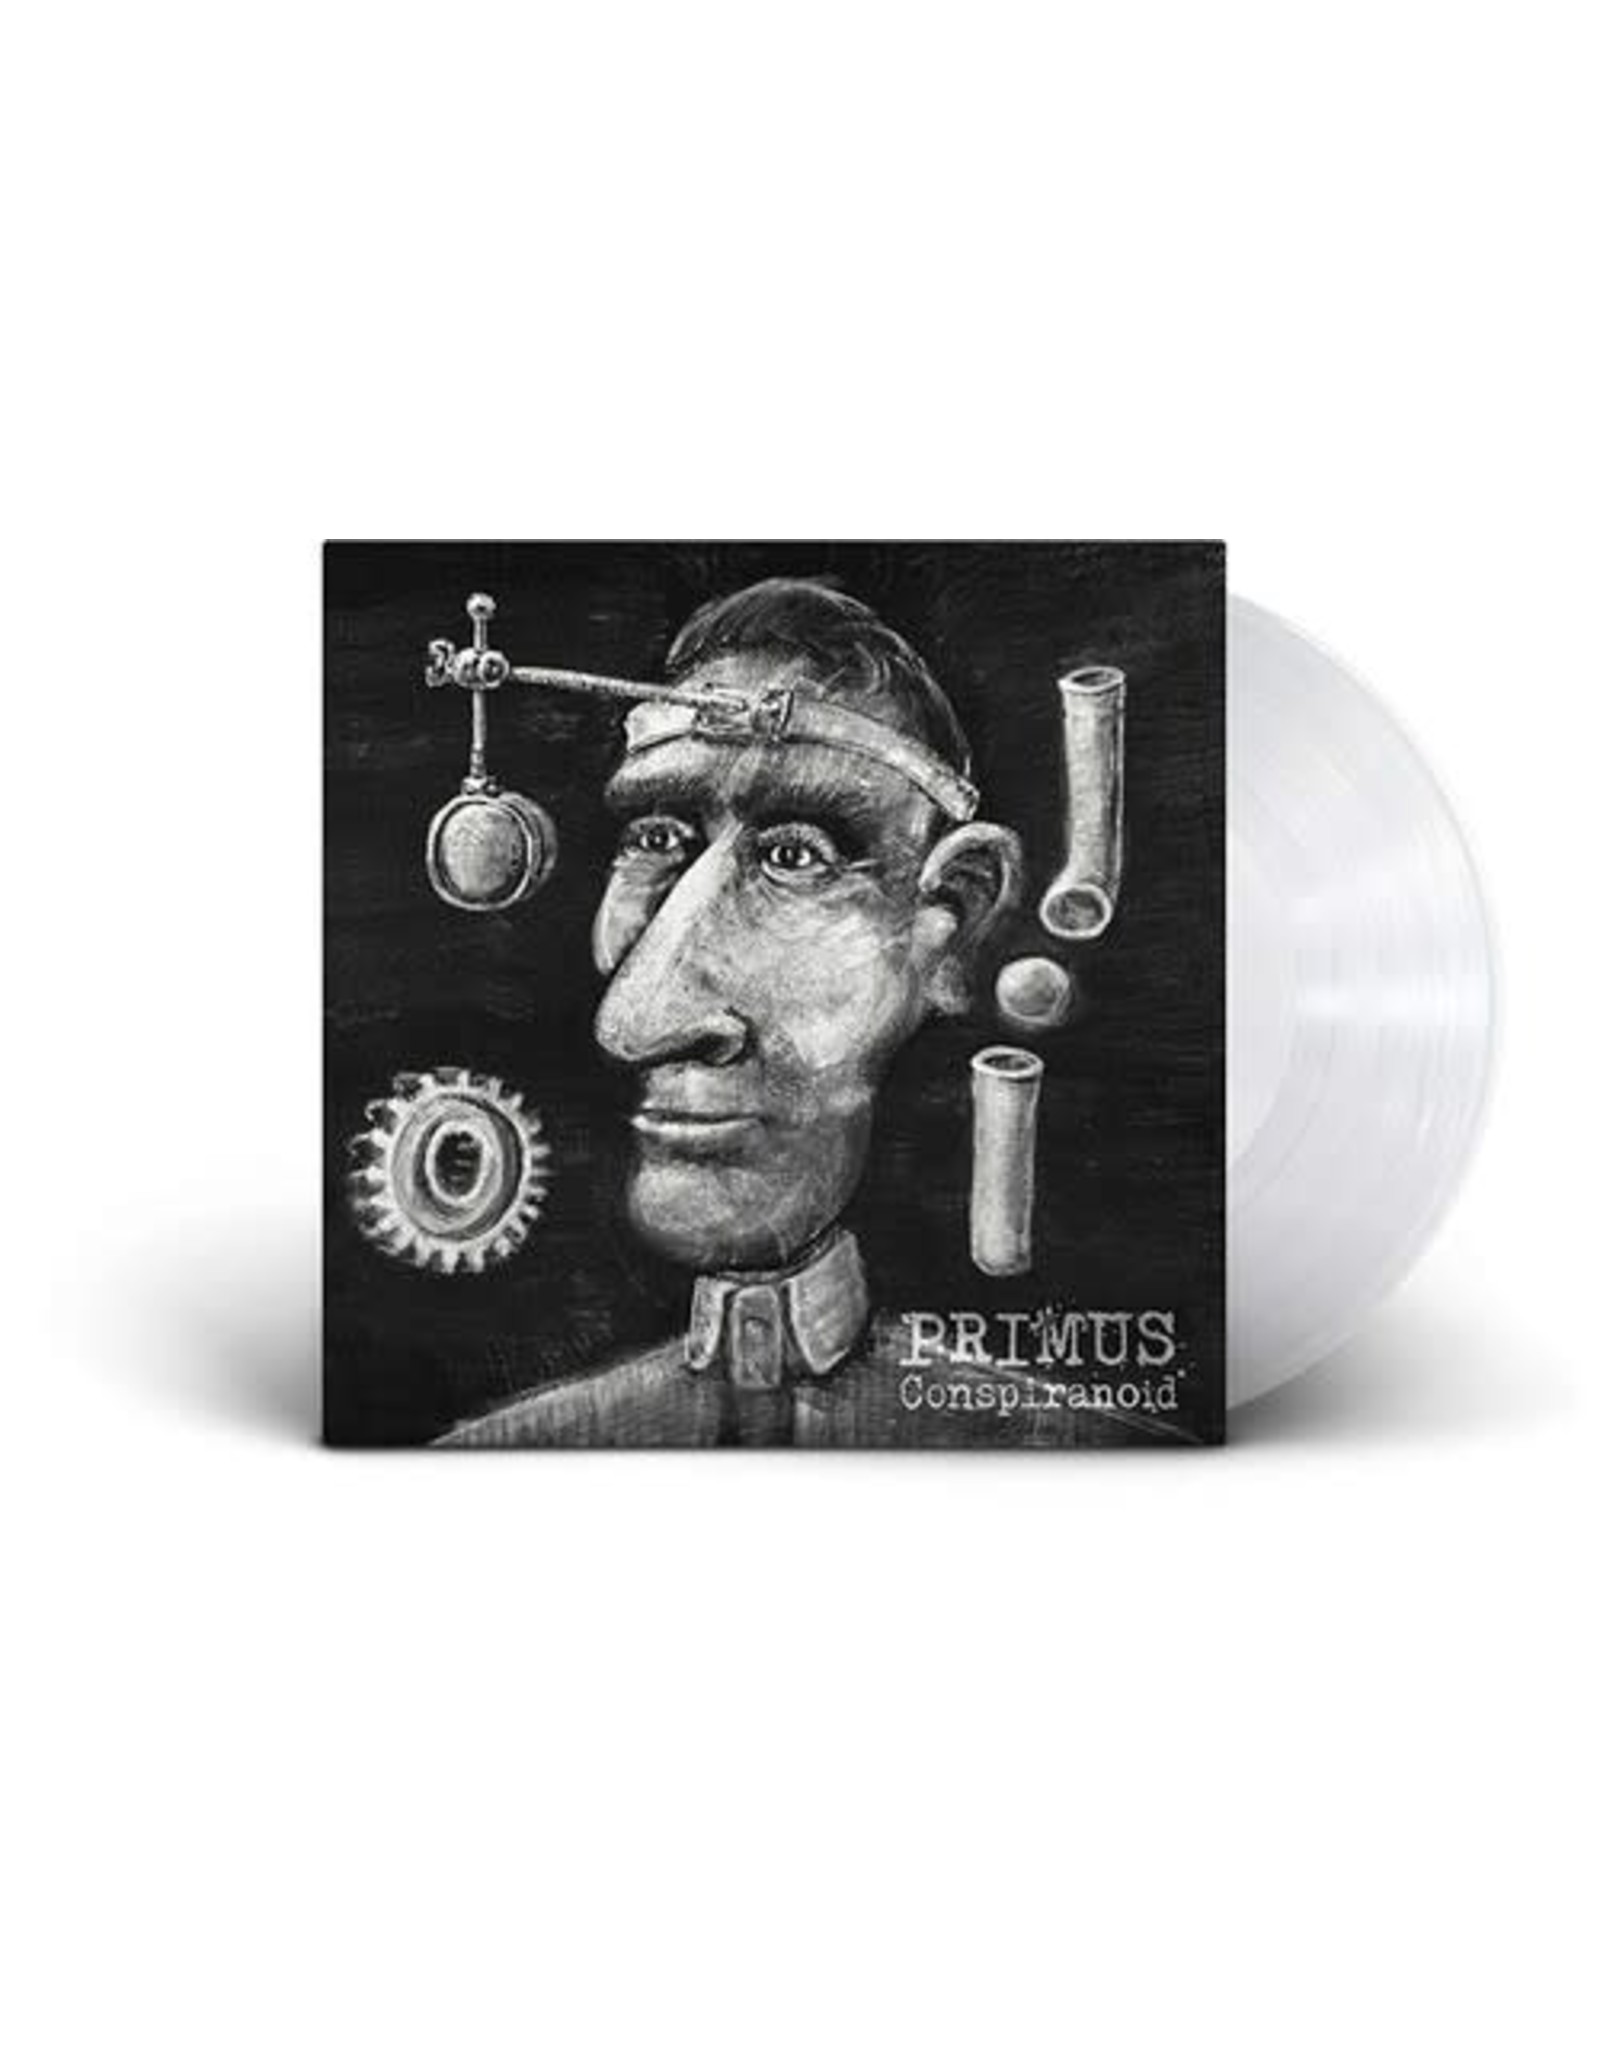 New Vinyl Primus - Conspiranoid (White) EP